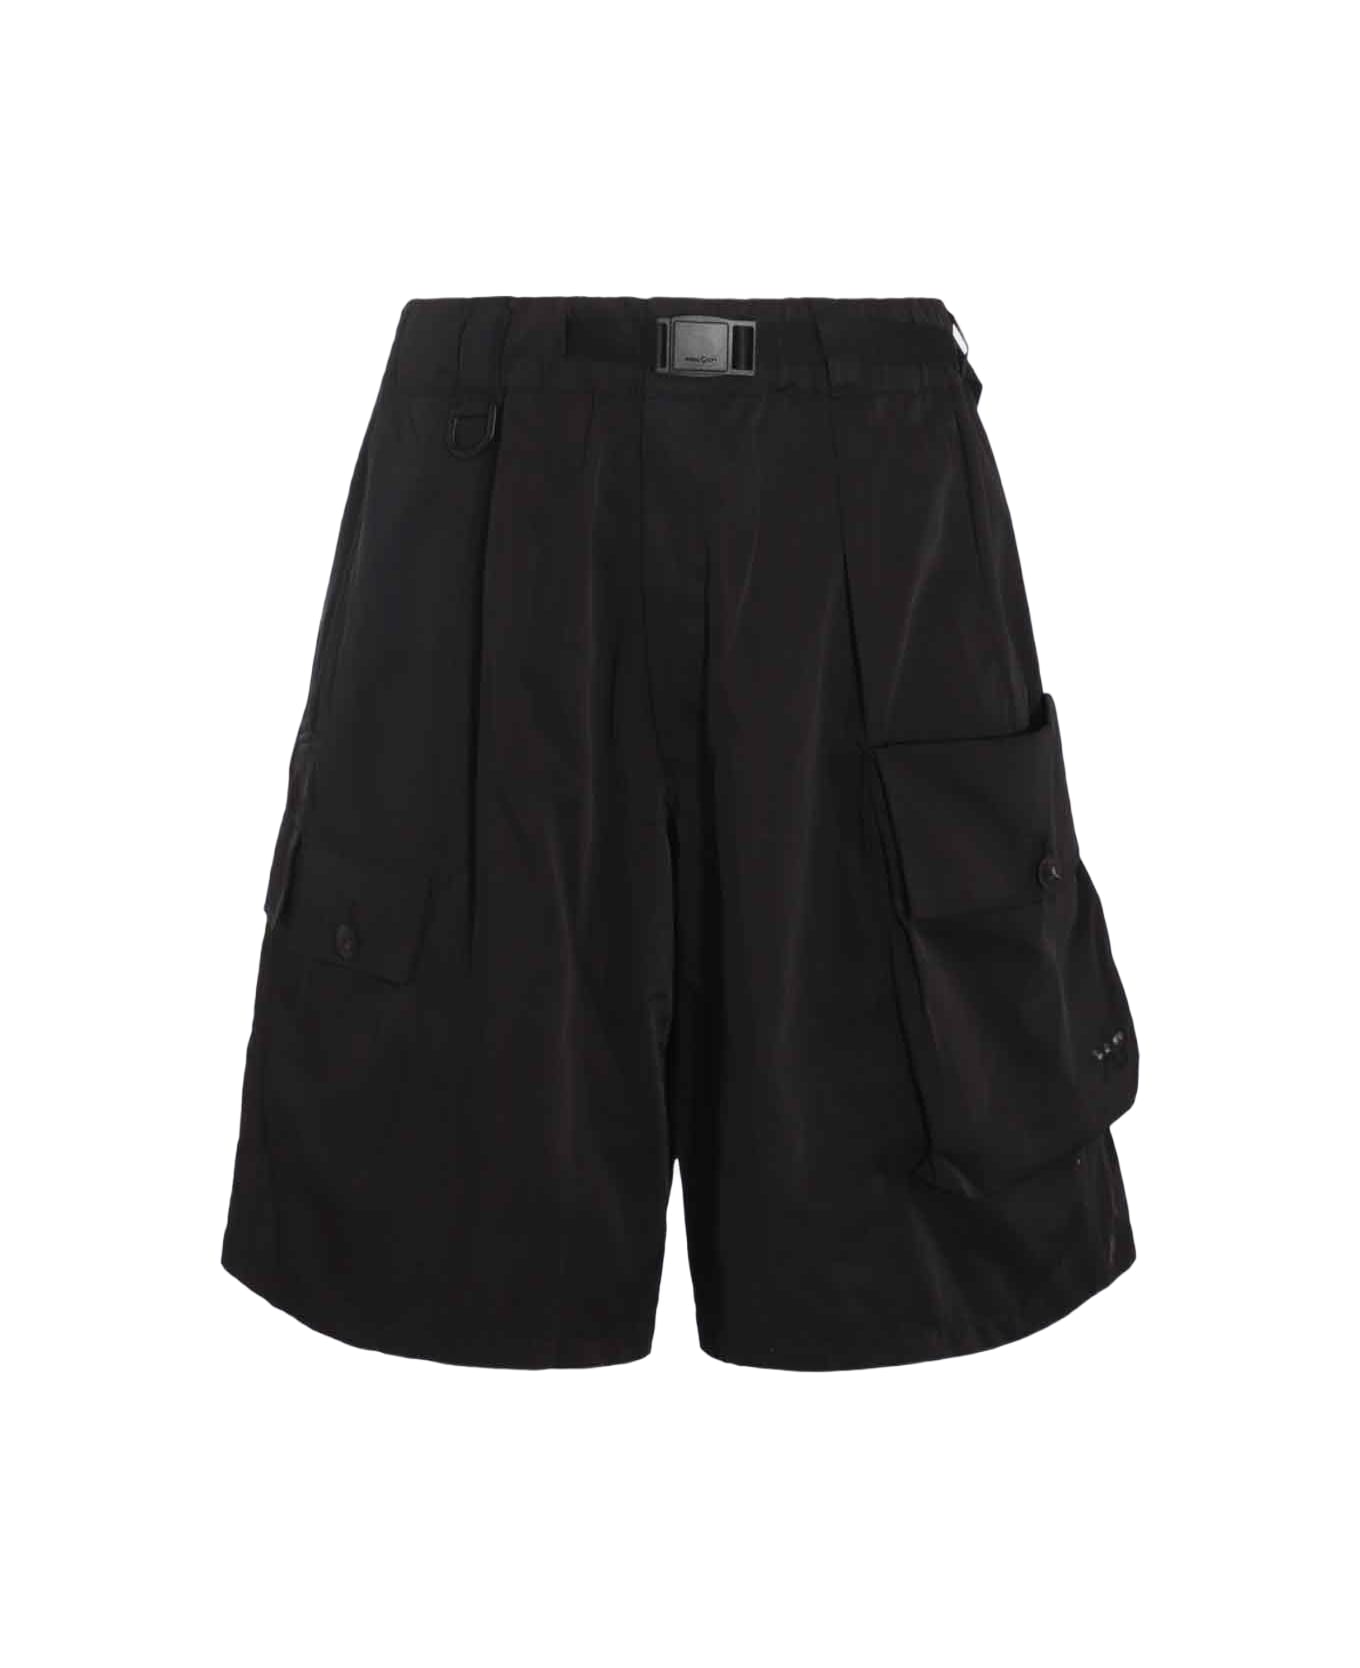 Y-3 Black Shorts - Black